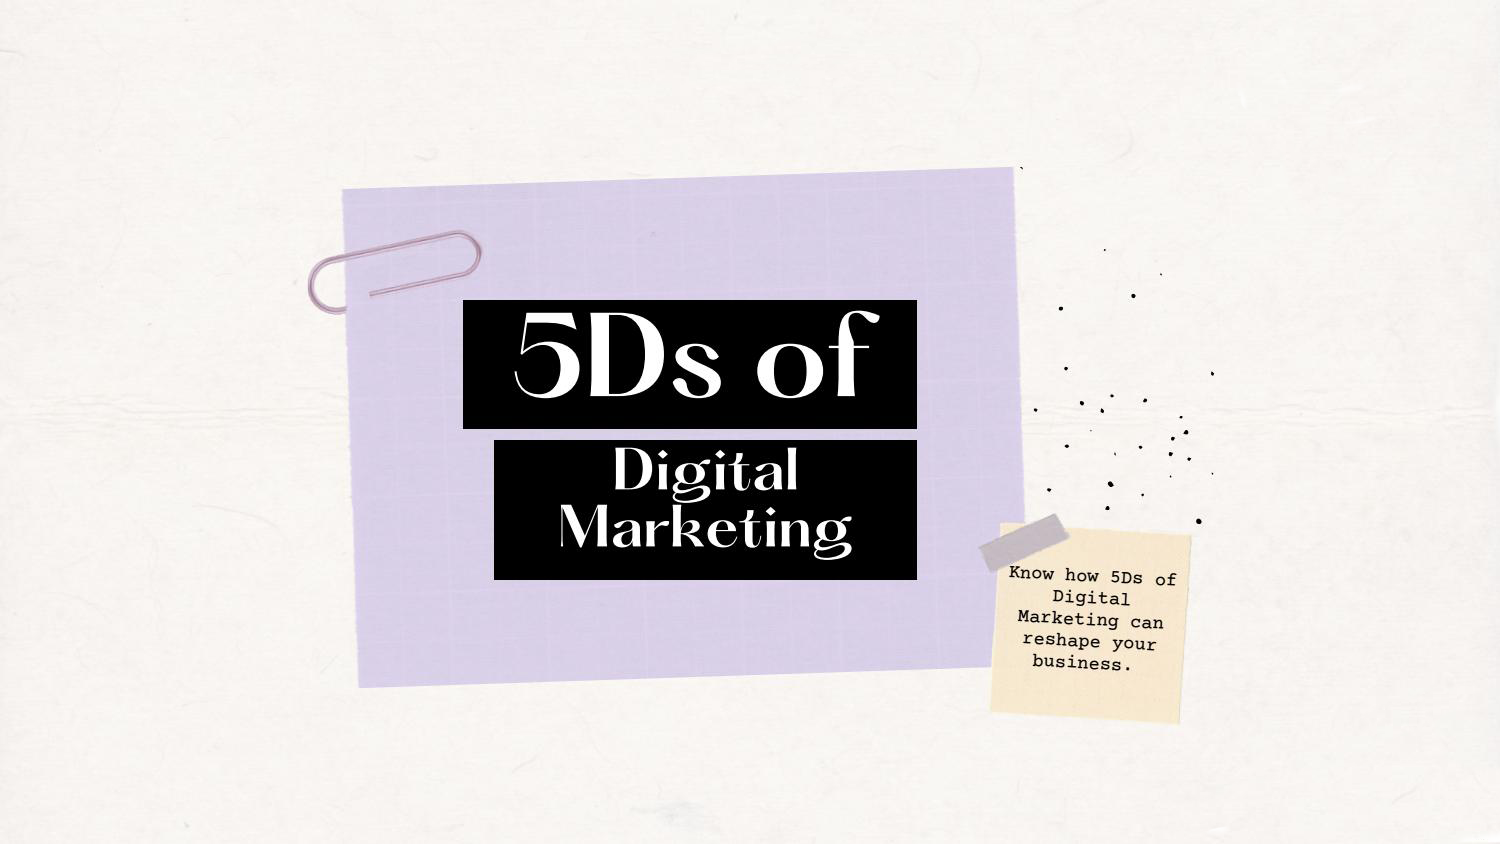 5 D’s of Digital Marketing